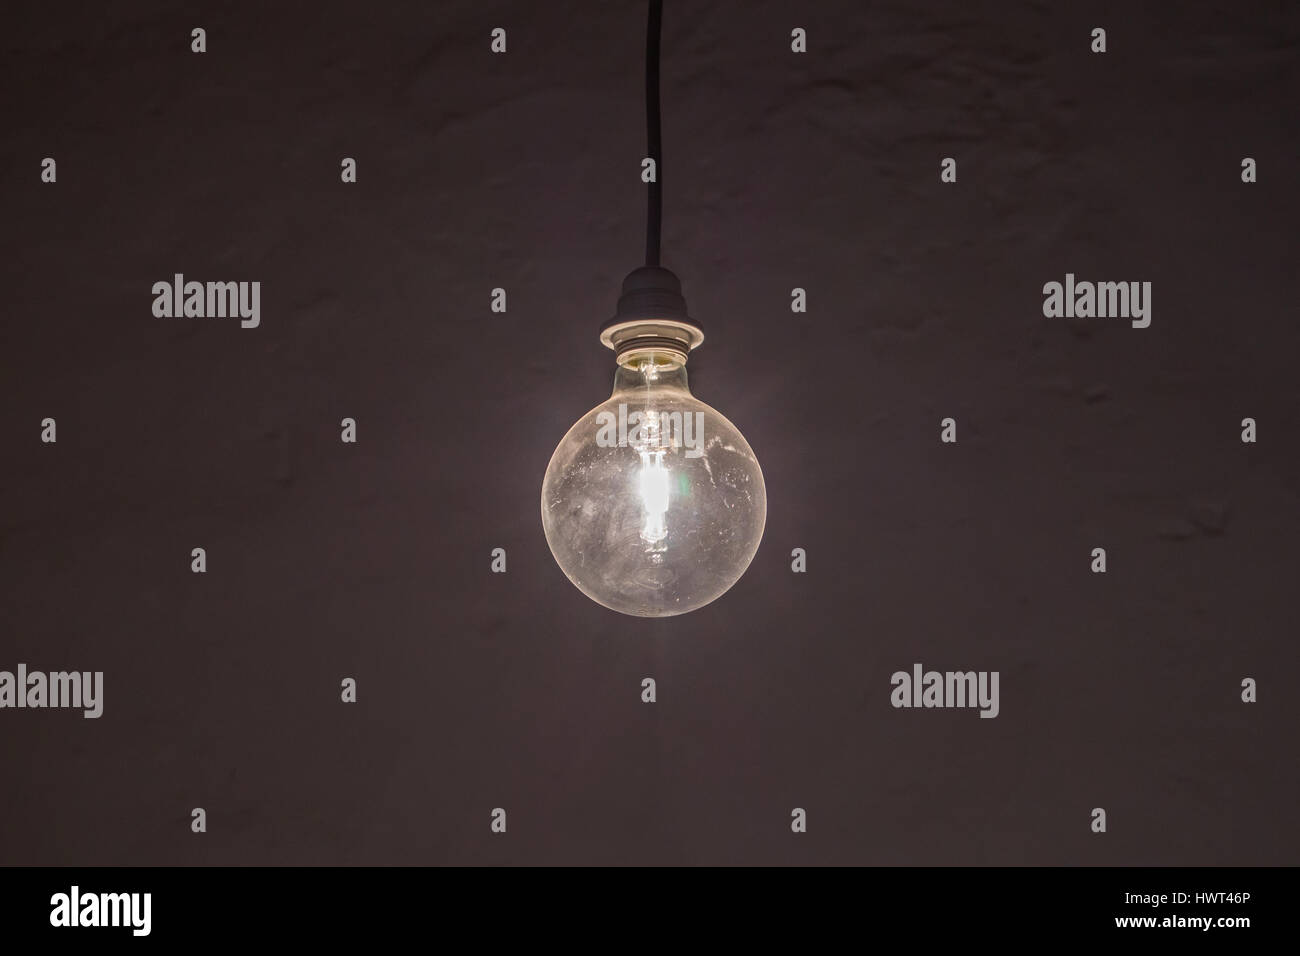 Halogen bulb lamp Stock Photo